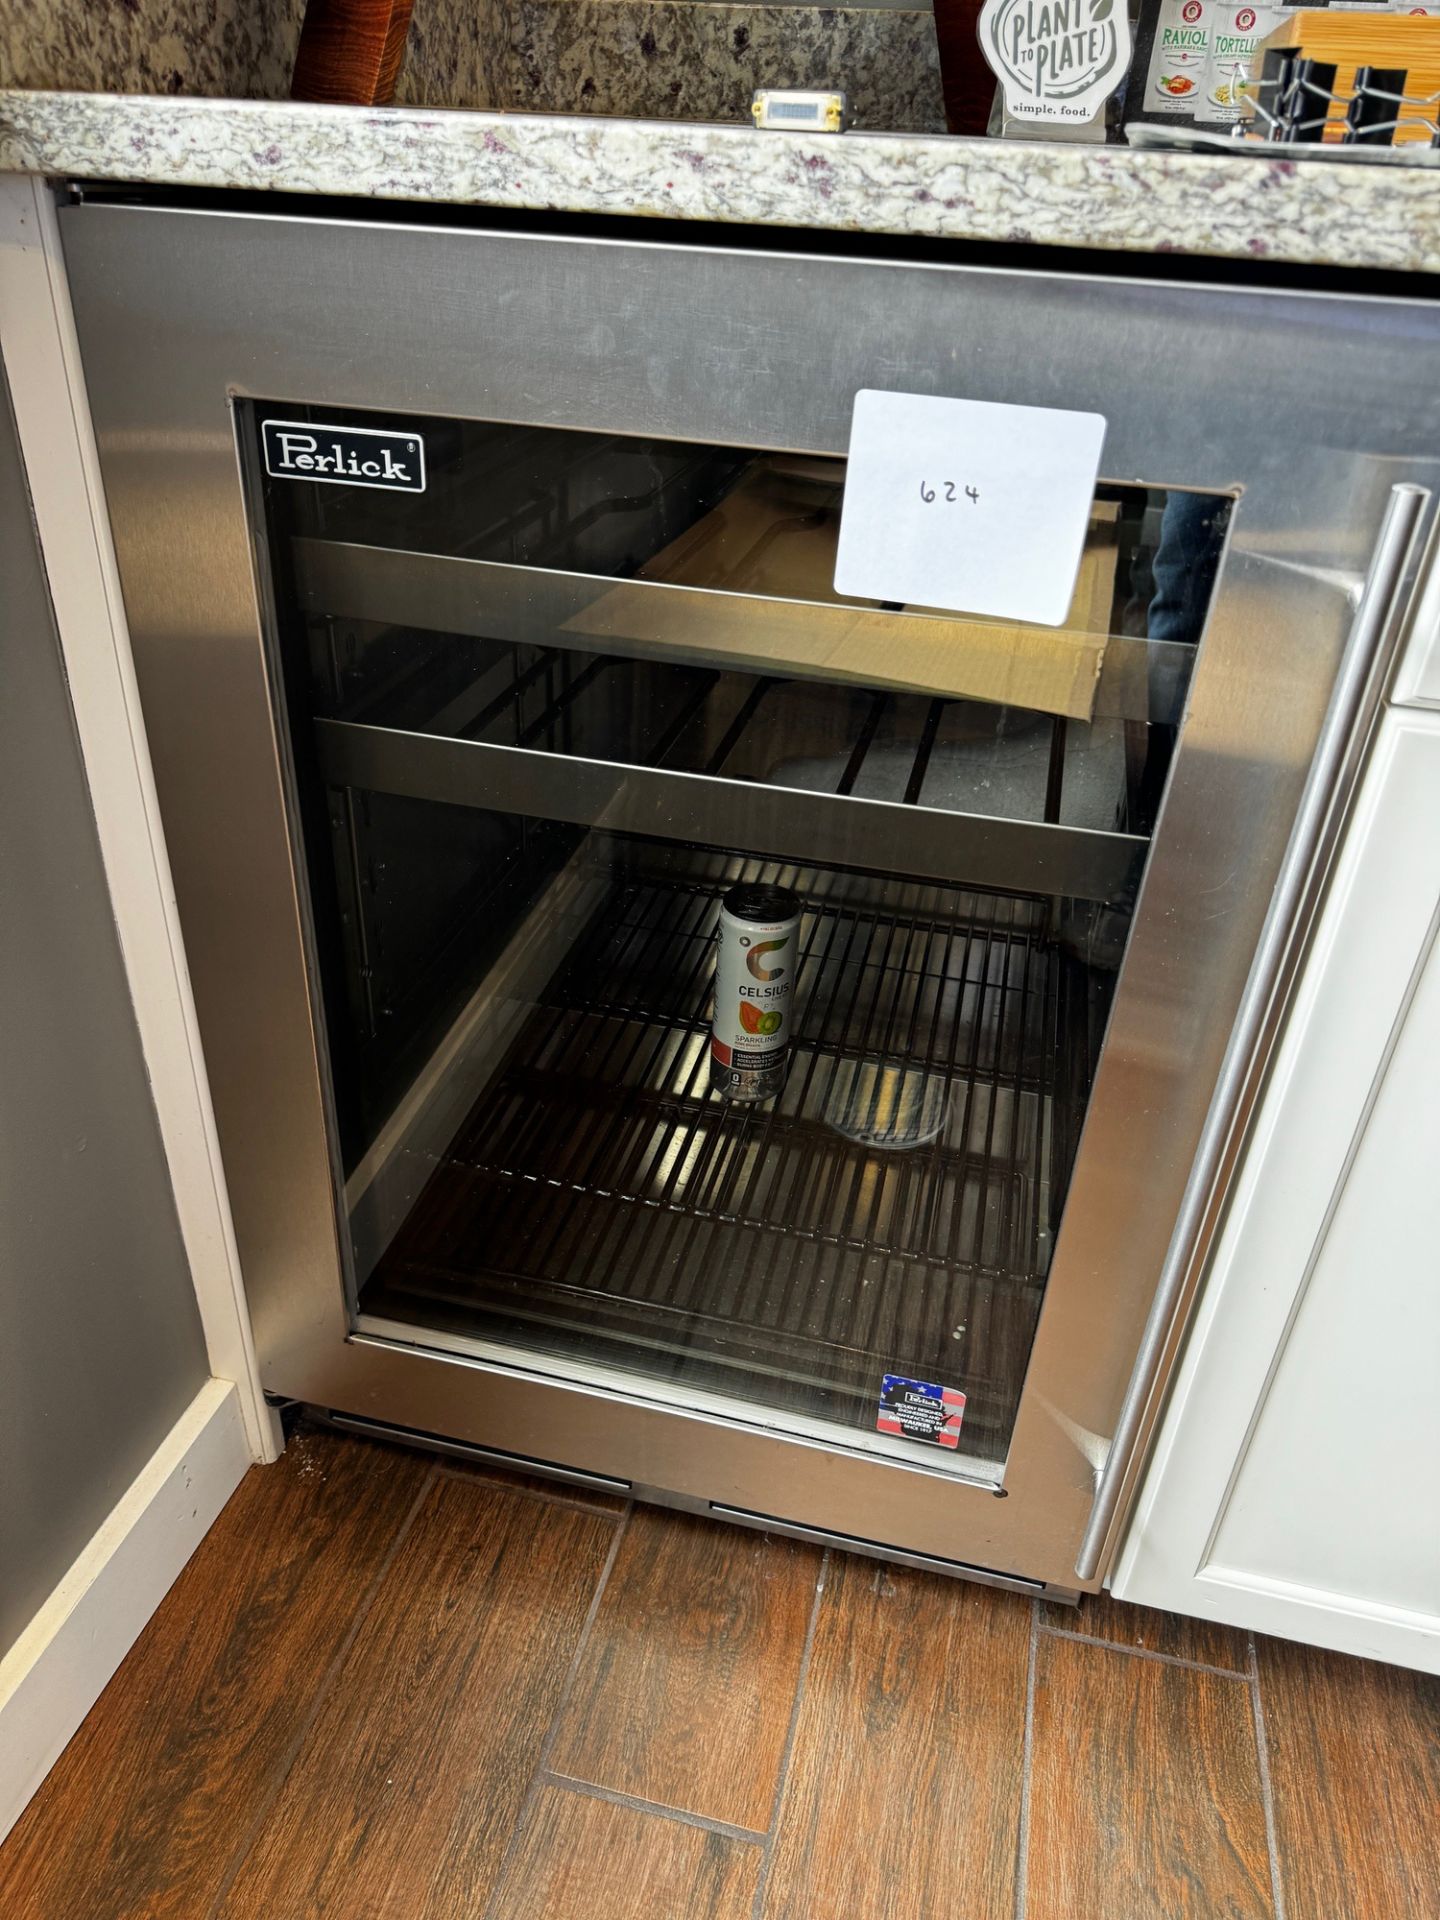 Perlic Display Refrigerator | Rig Fee $150